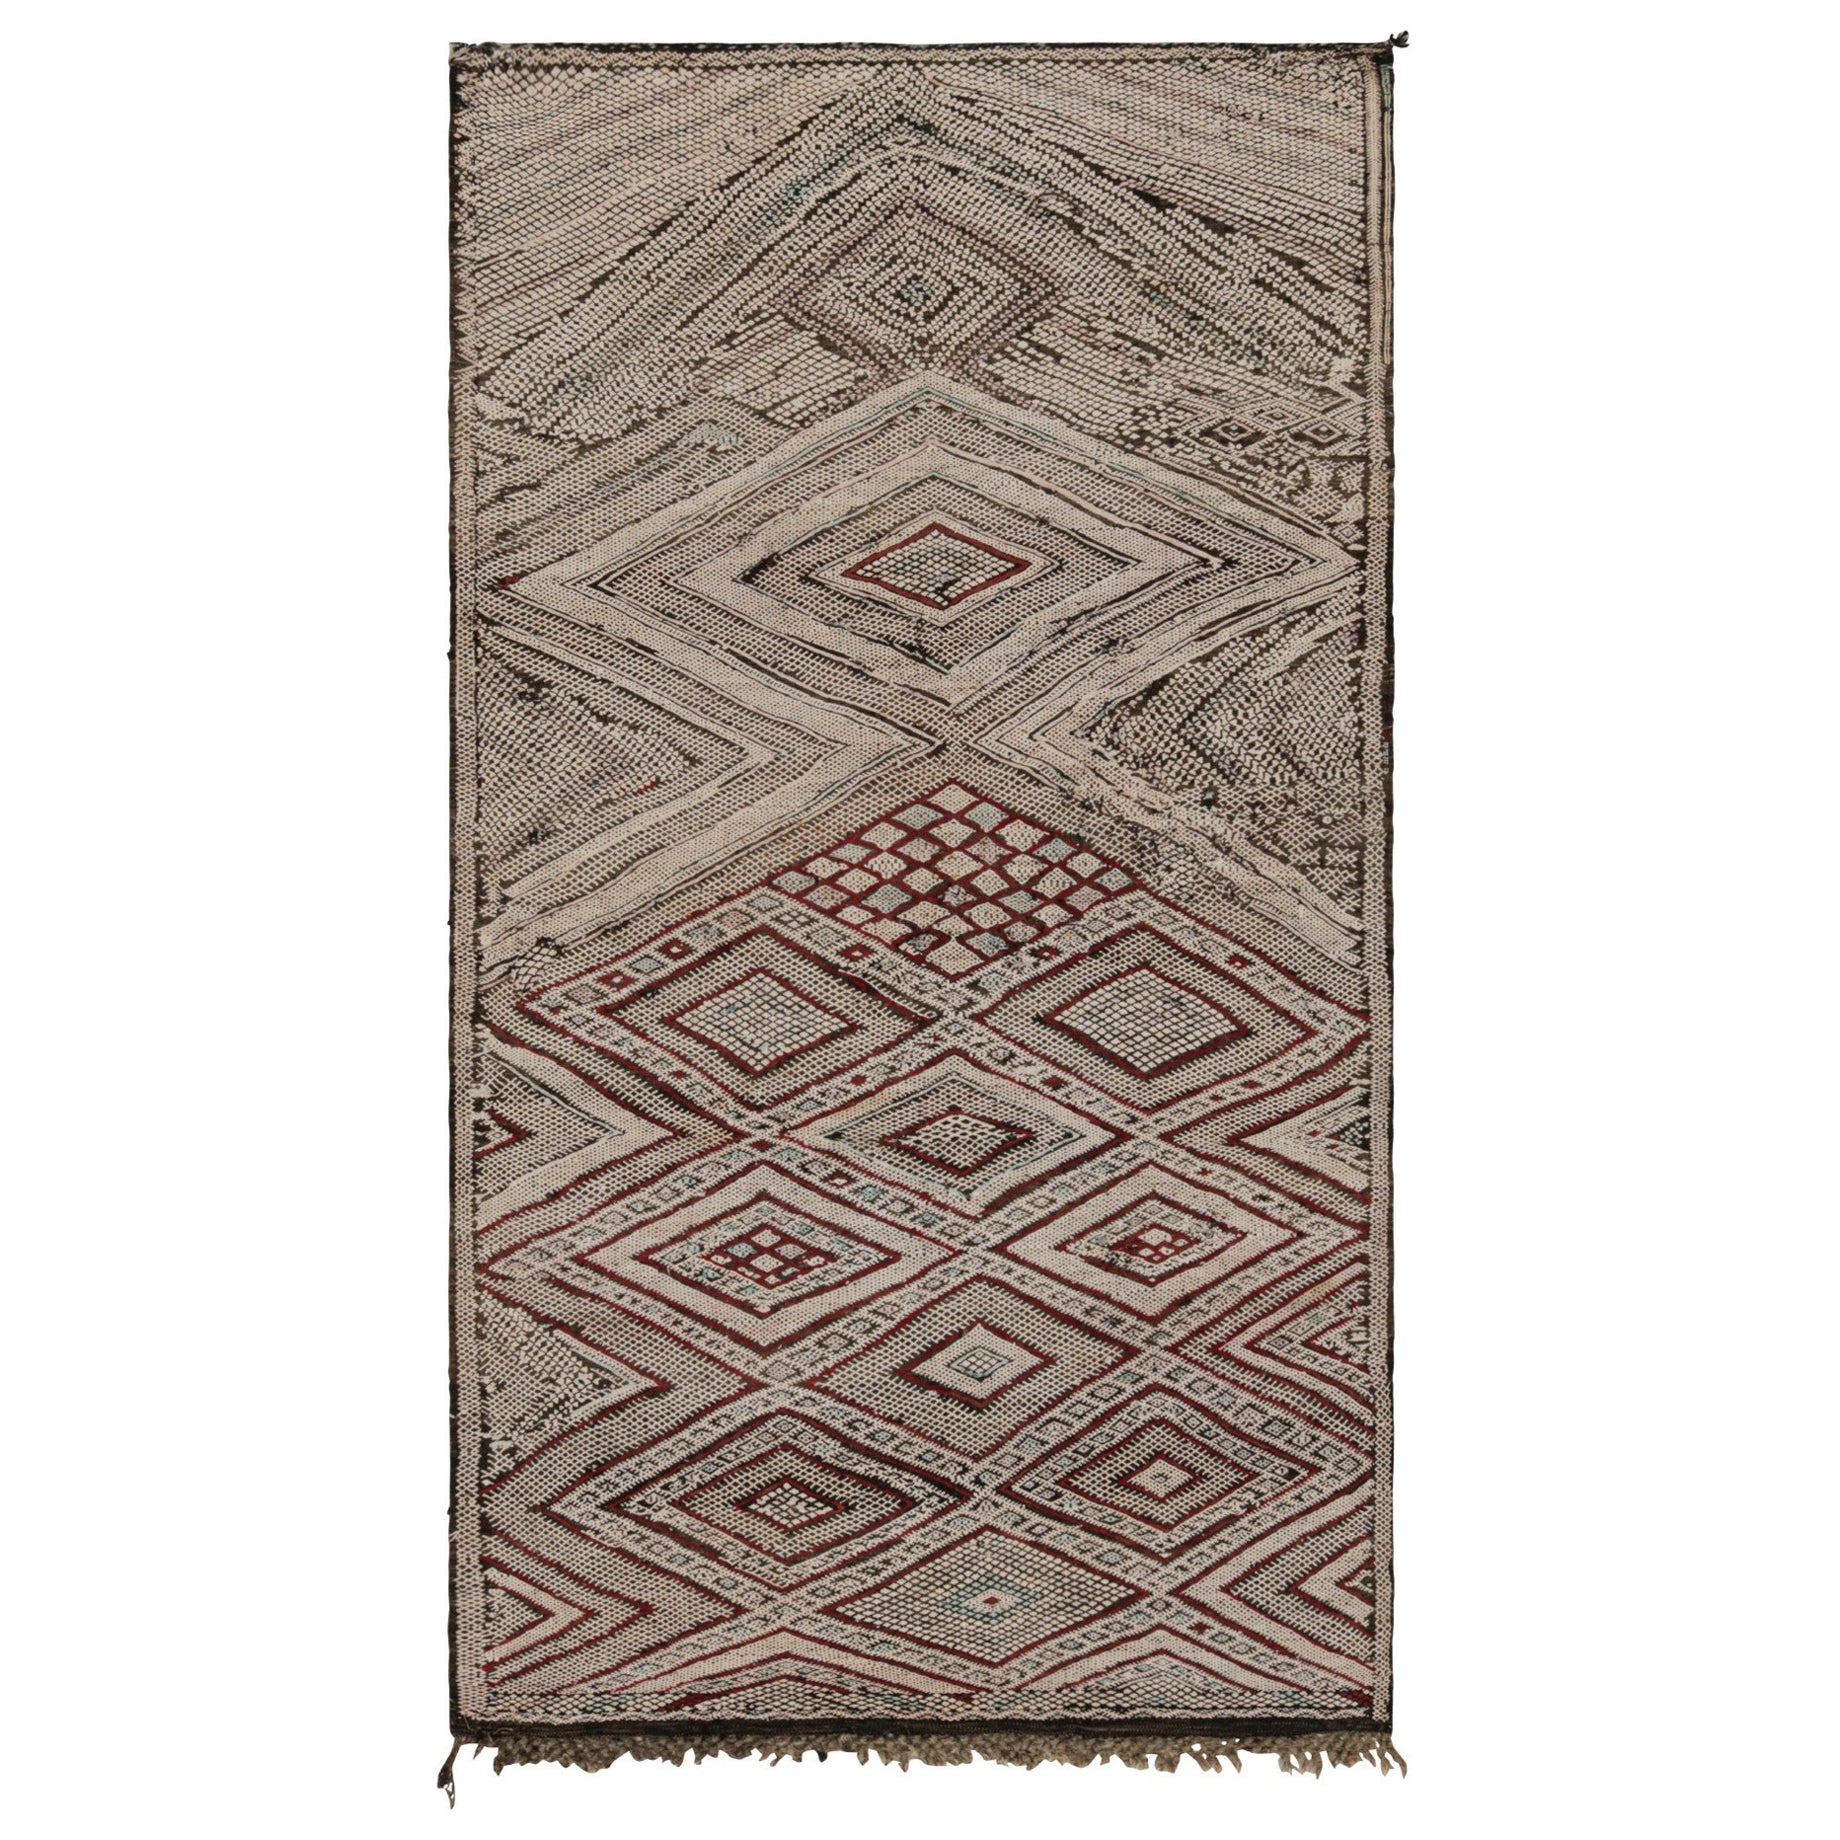 Vintage Zayane Moroccan Kilim in Polychromatic Tribal Patterns by Rug & Kilim